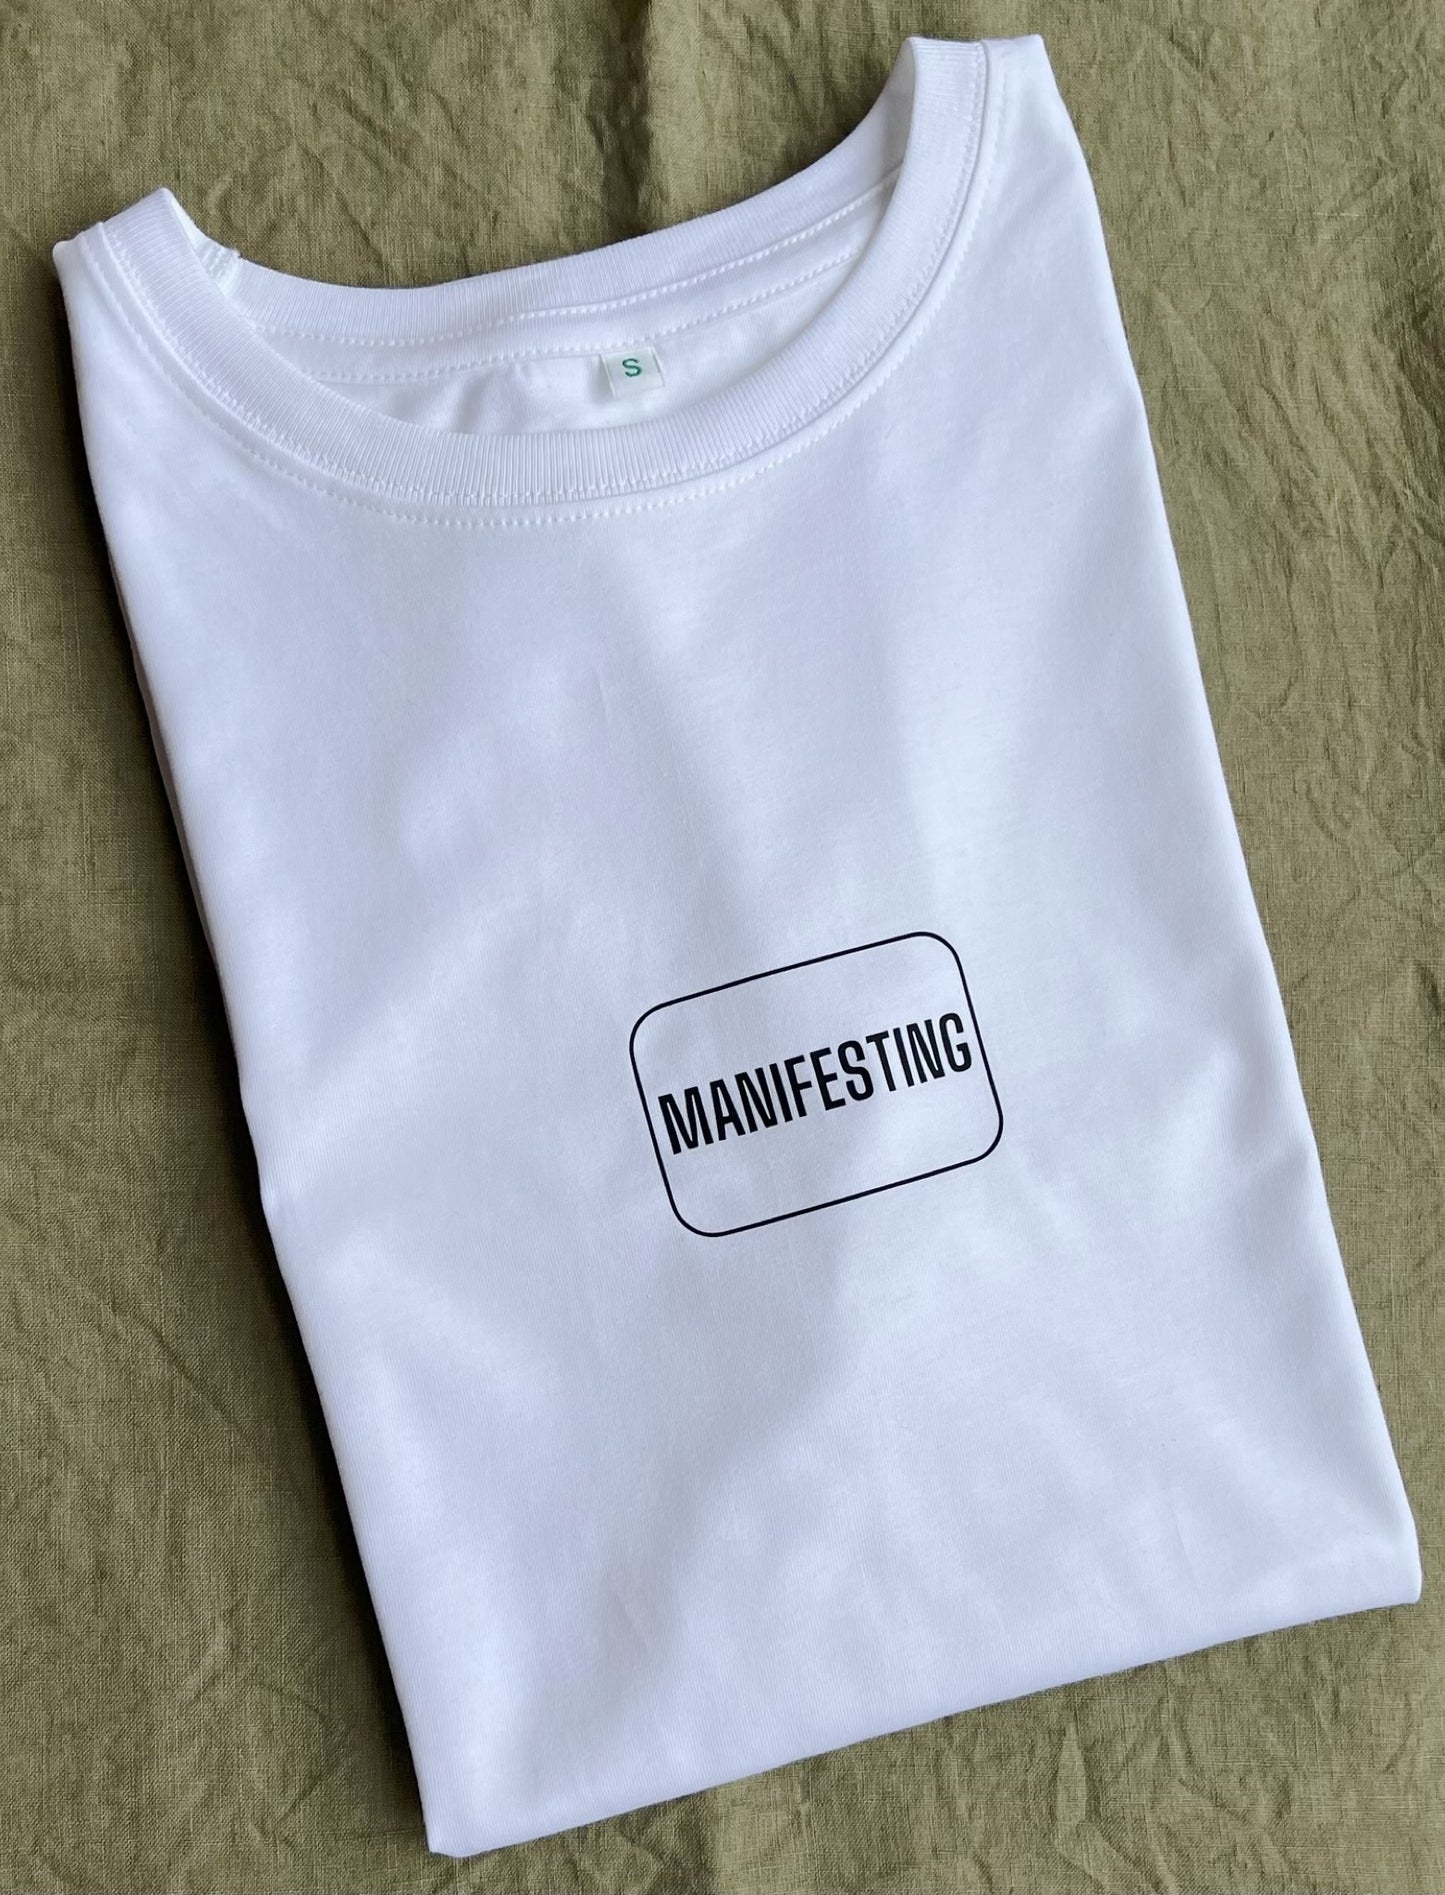 Inspirational T-Shirt: Manifesting